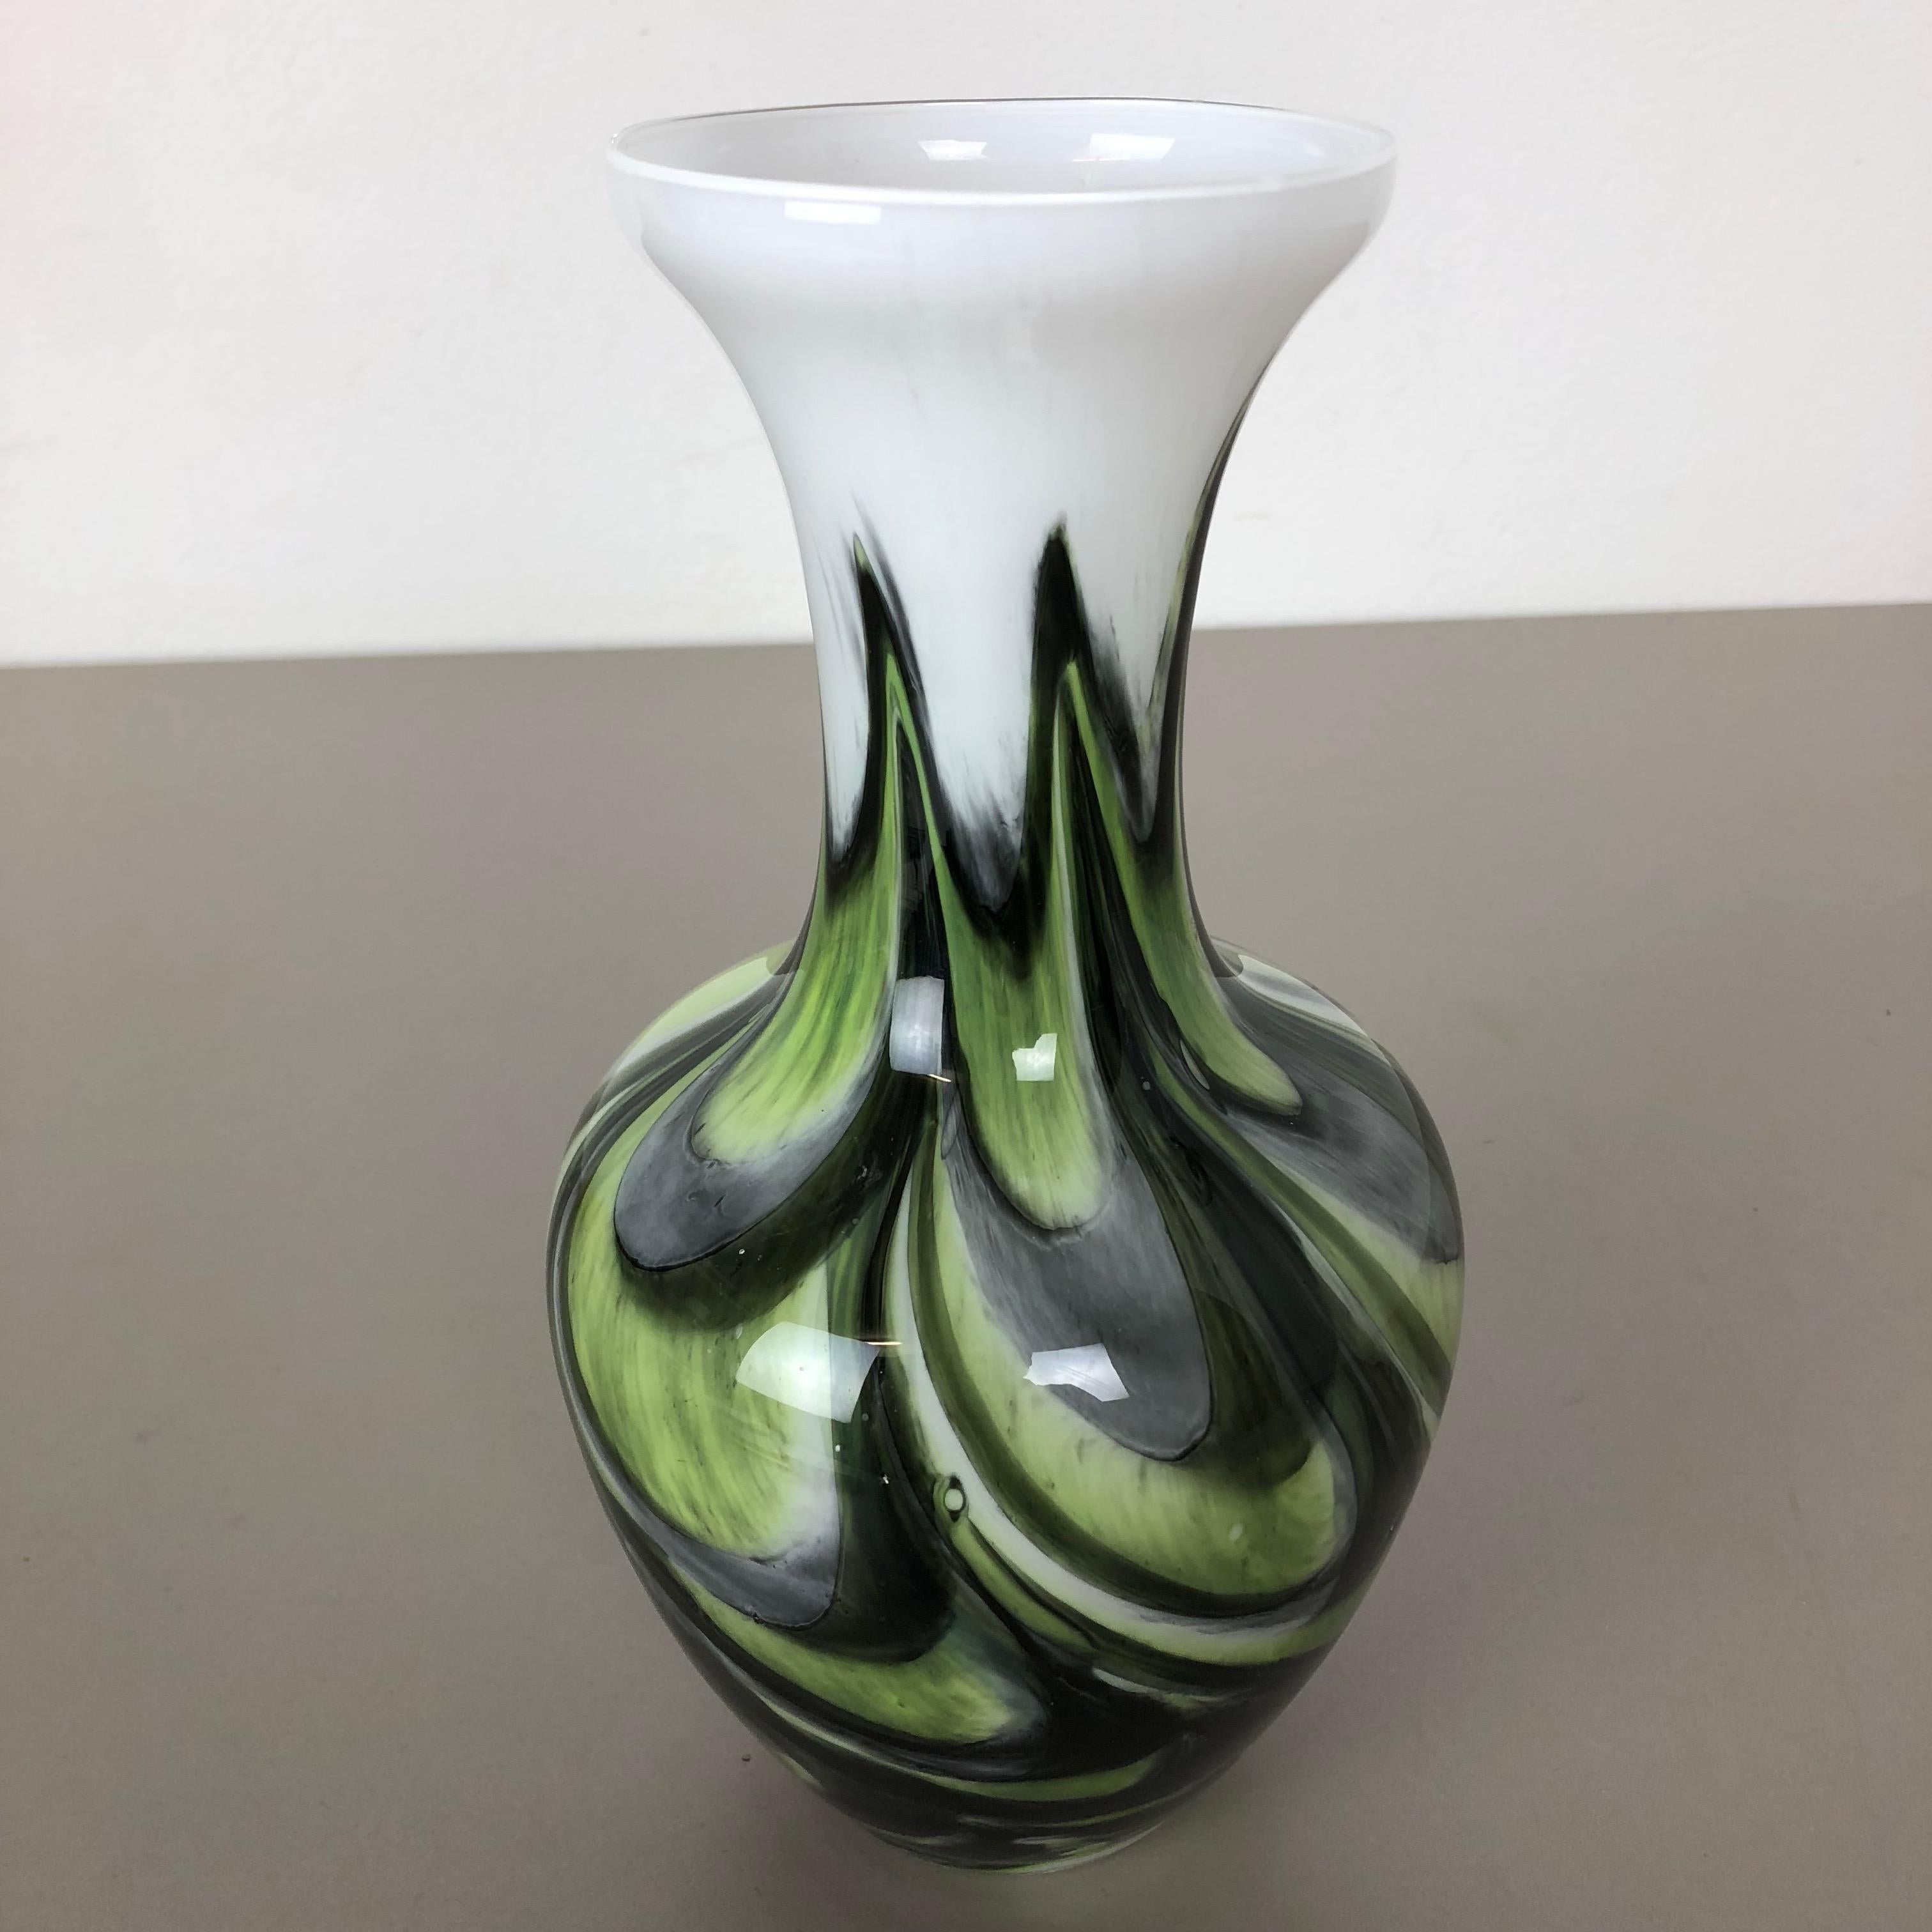 Rare Extra Large Vintage Pop Art Opaline Florence Glass Vase Design, Italy 1970s For Sale 1